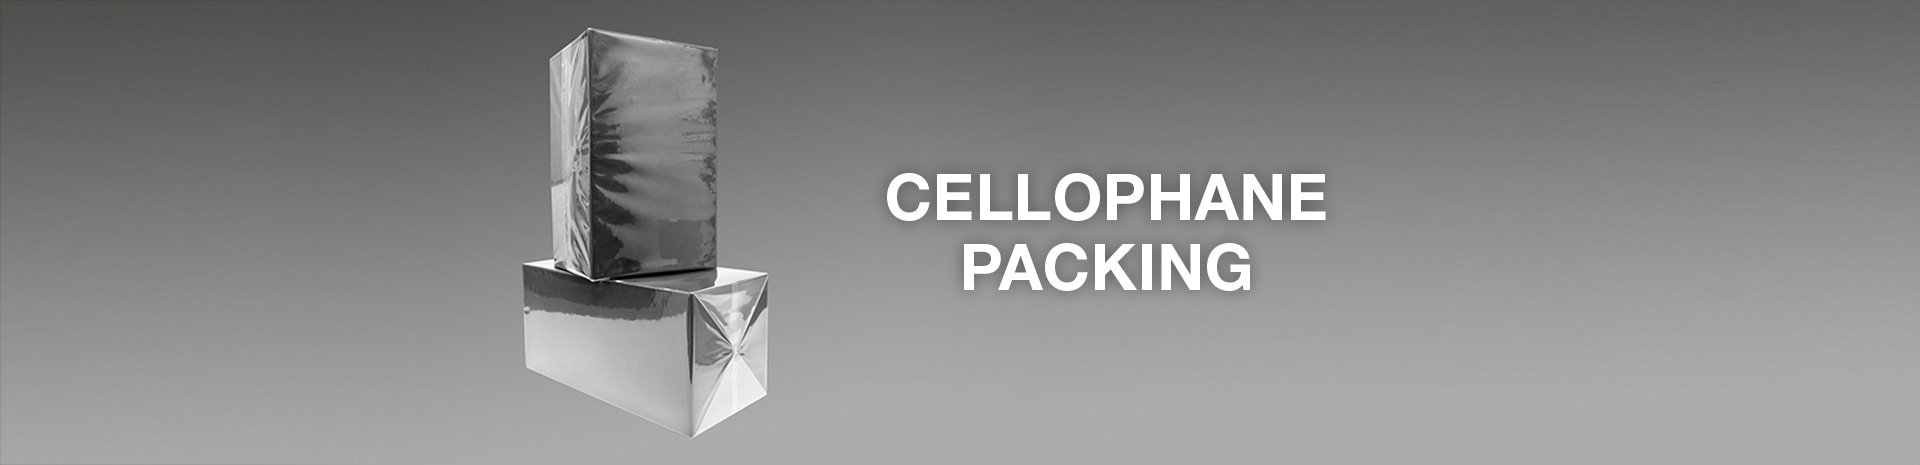 Cellophane Packing